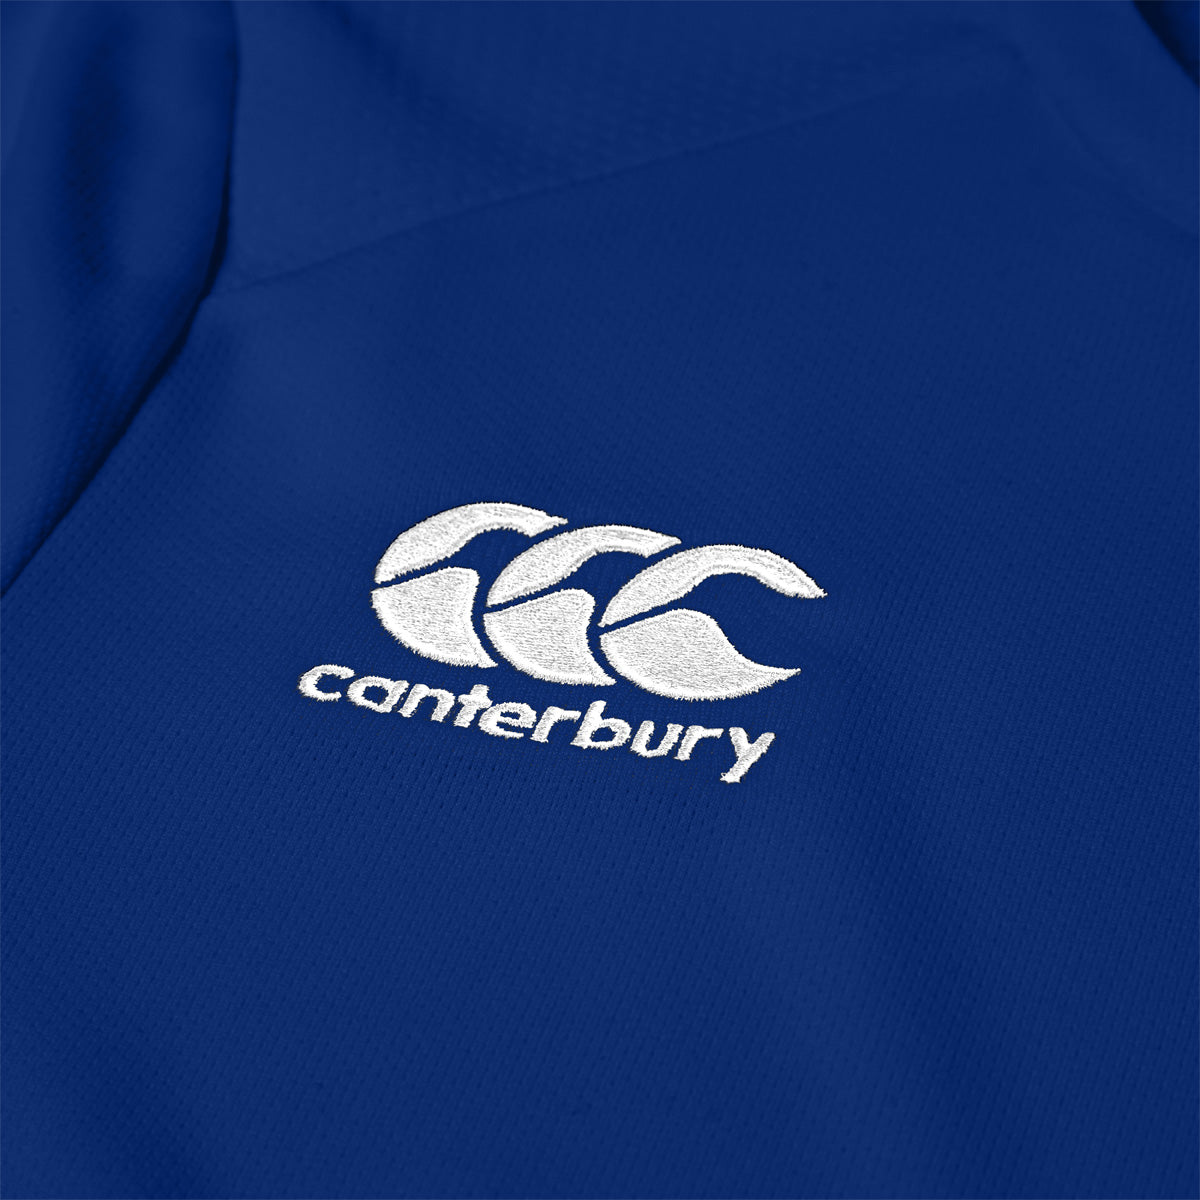 Canterbury Club Dry Tee Female in Royal, Canterbury CCC logo close up